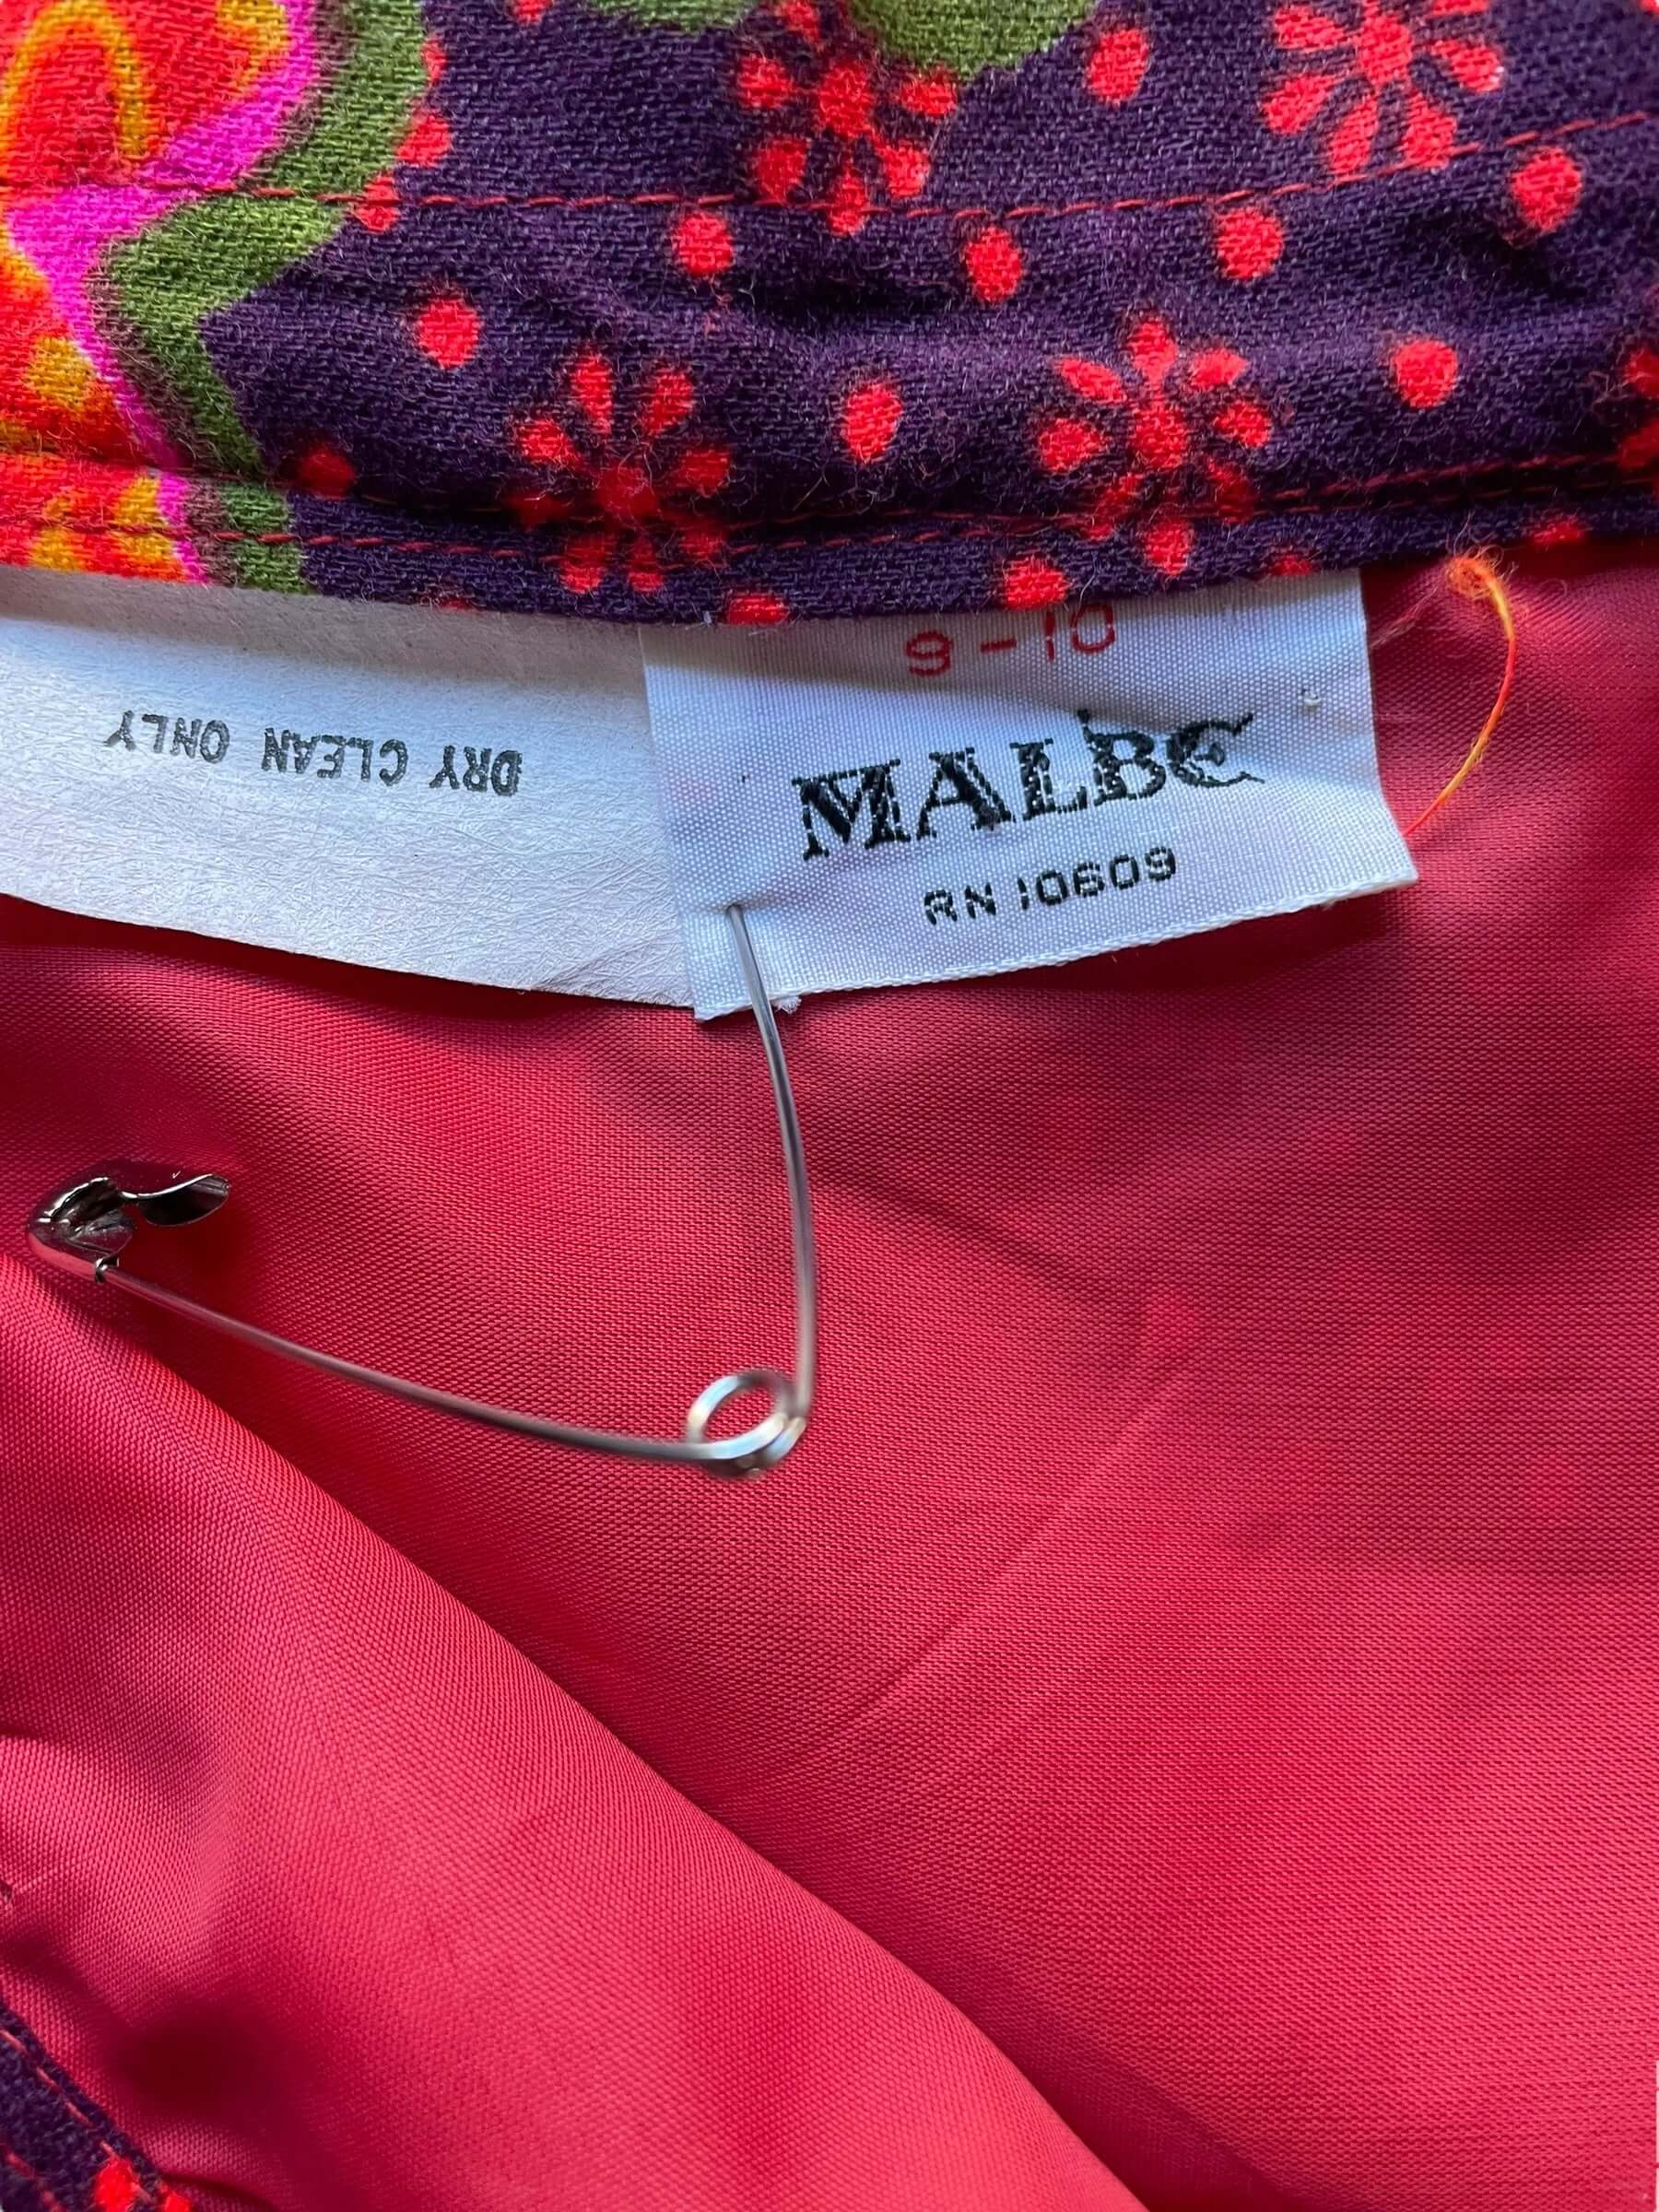 Tag view of Vintage 1960s Malbe Floral Skirt SZ M | Barn Owl Ladies Clothing | Seattle True Vintage